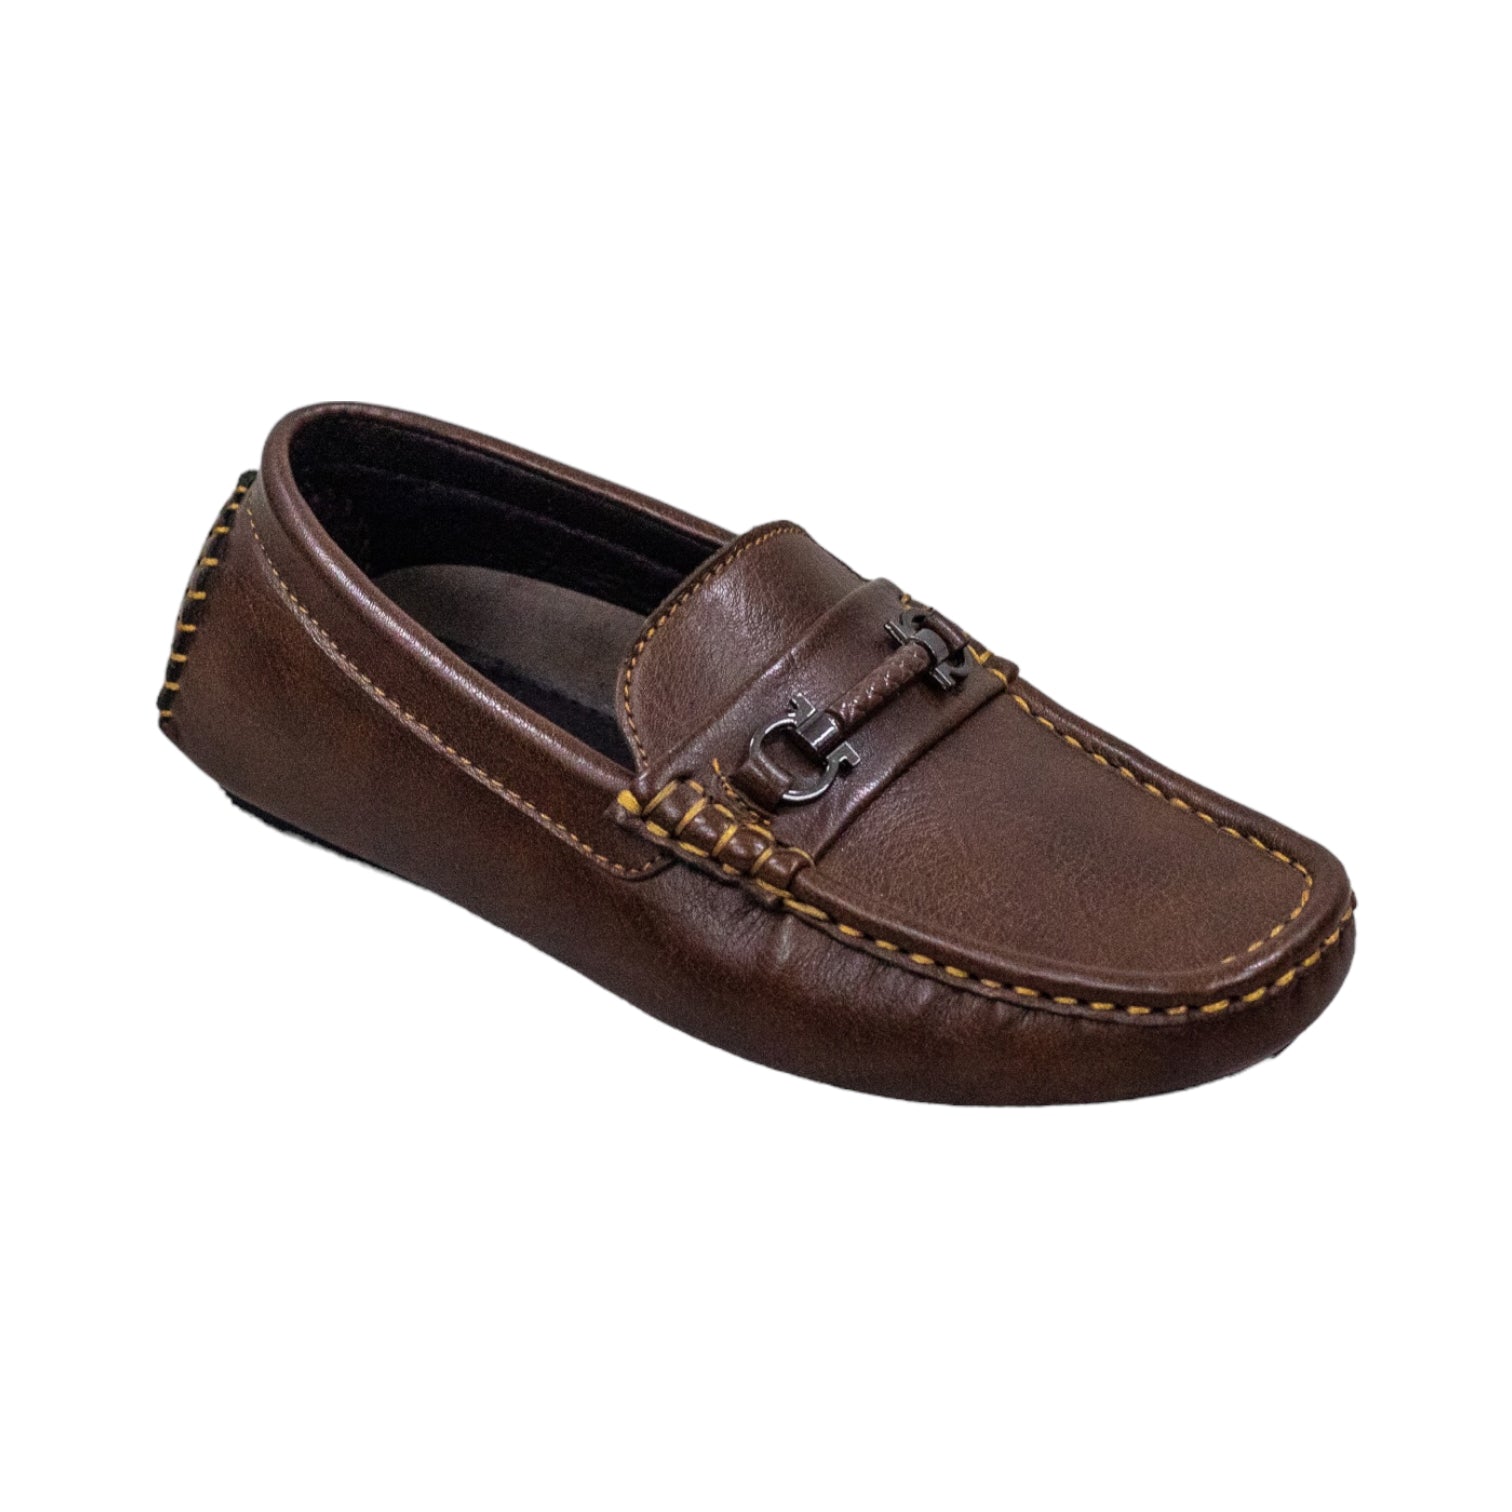 Brown infant boys moccasins shoes gucci